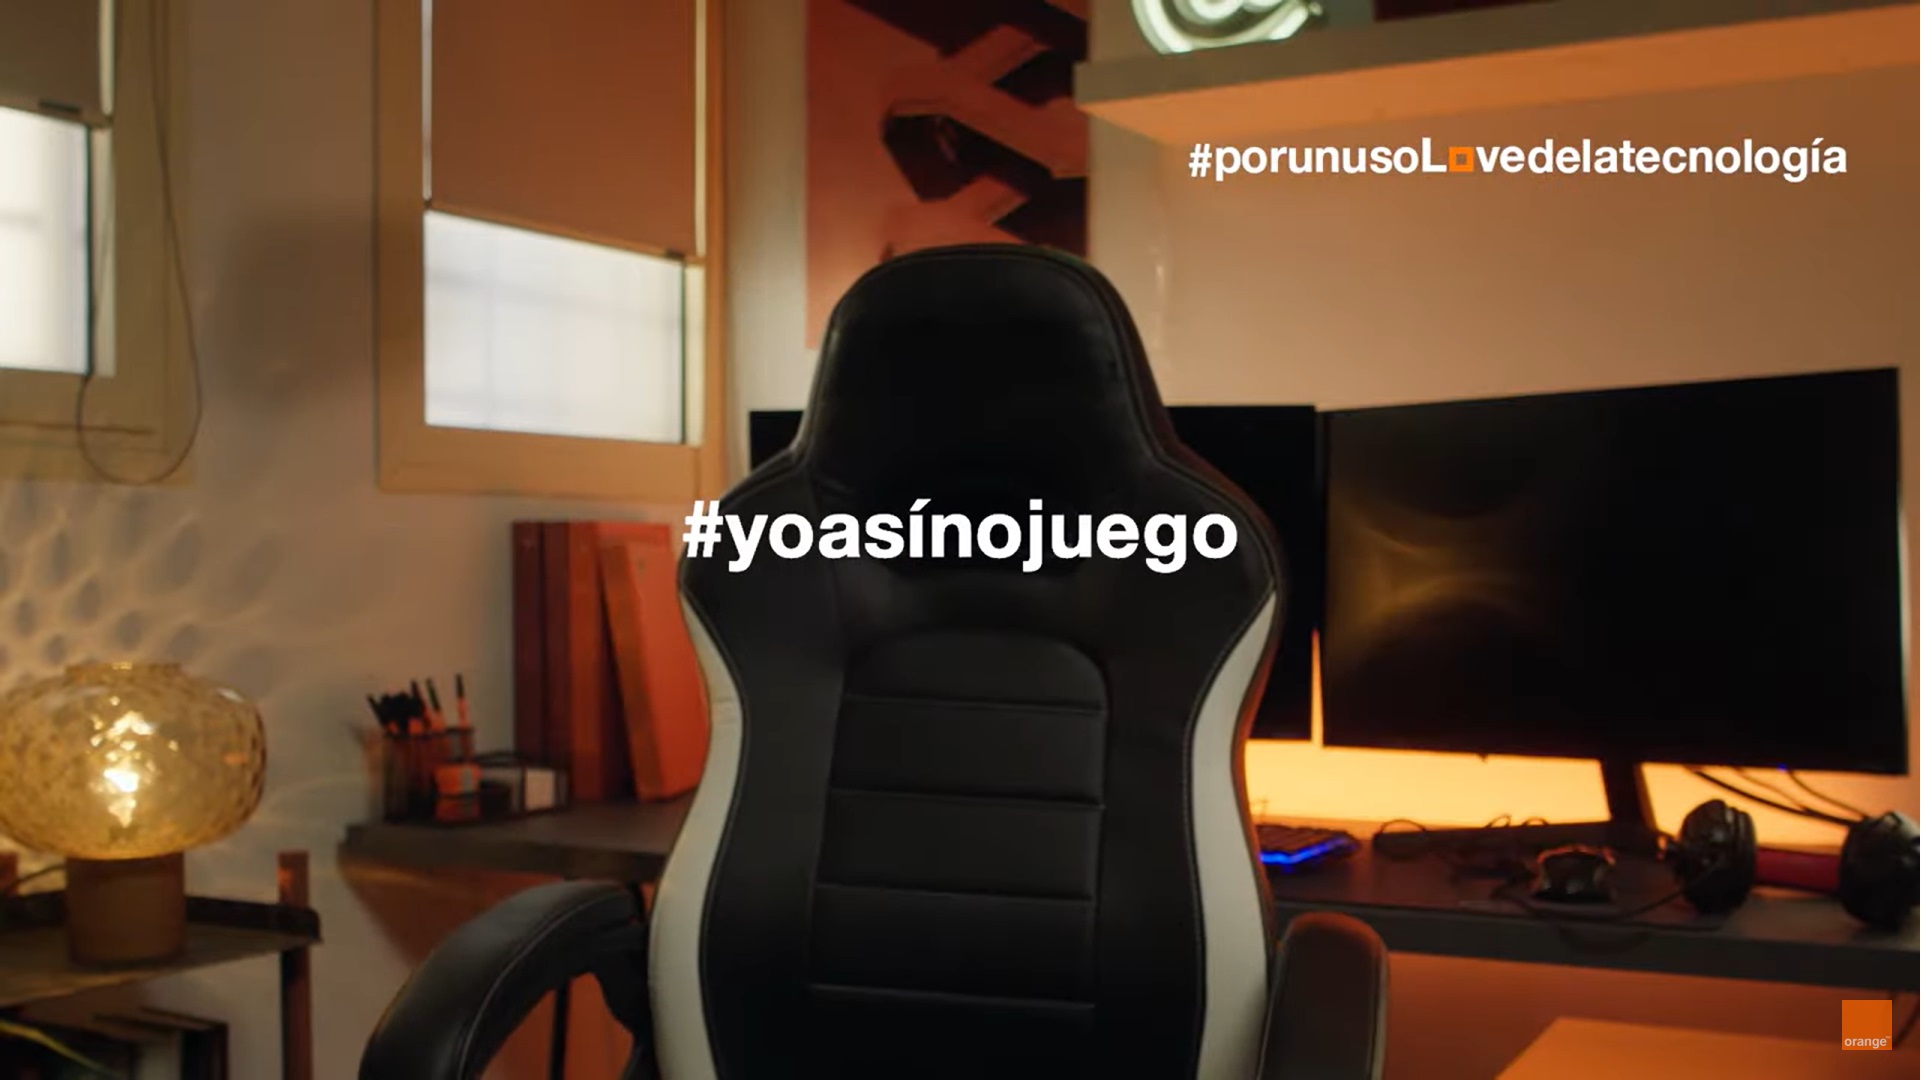 Sillón de gamer vacío con el lema #yoasínojuego 